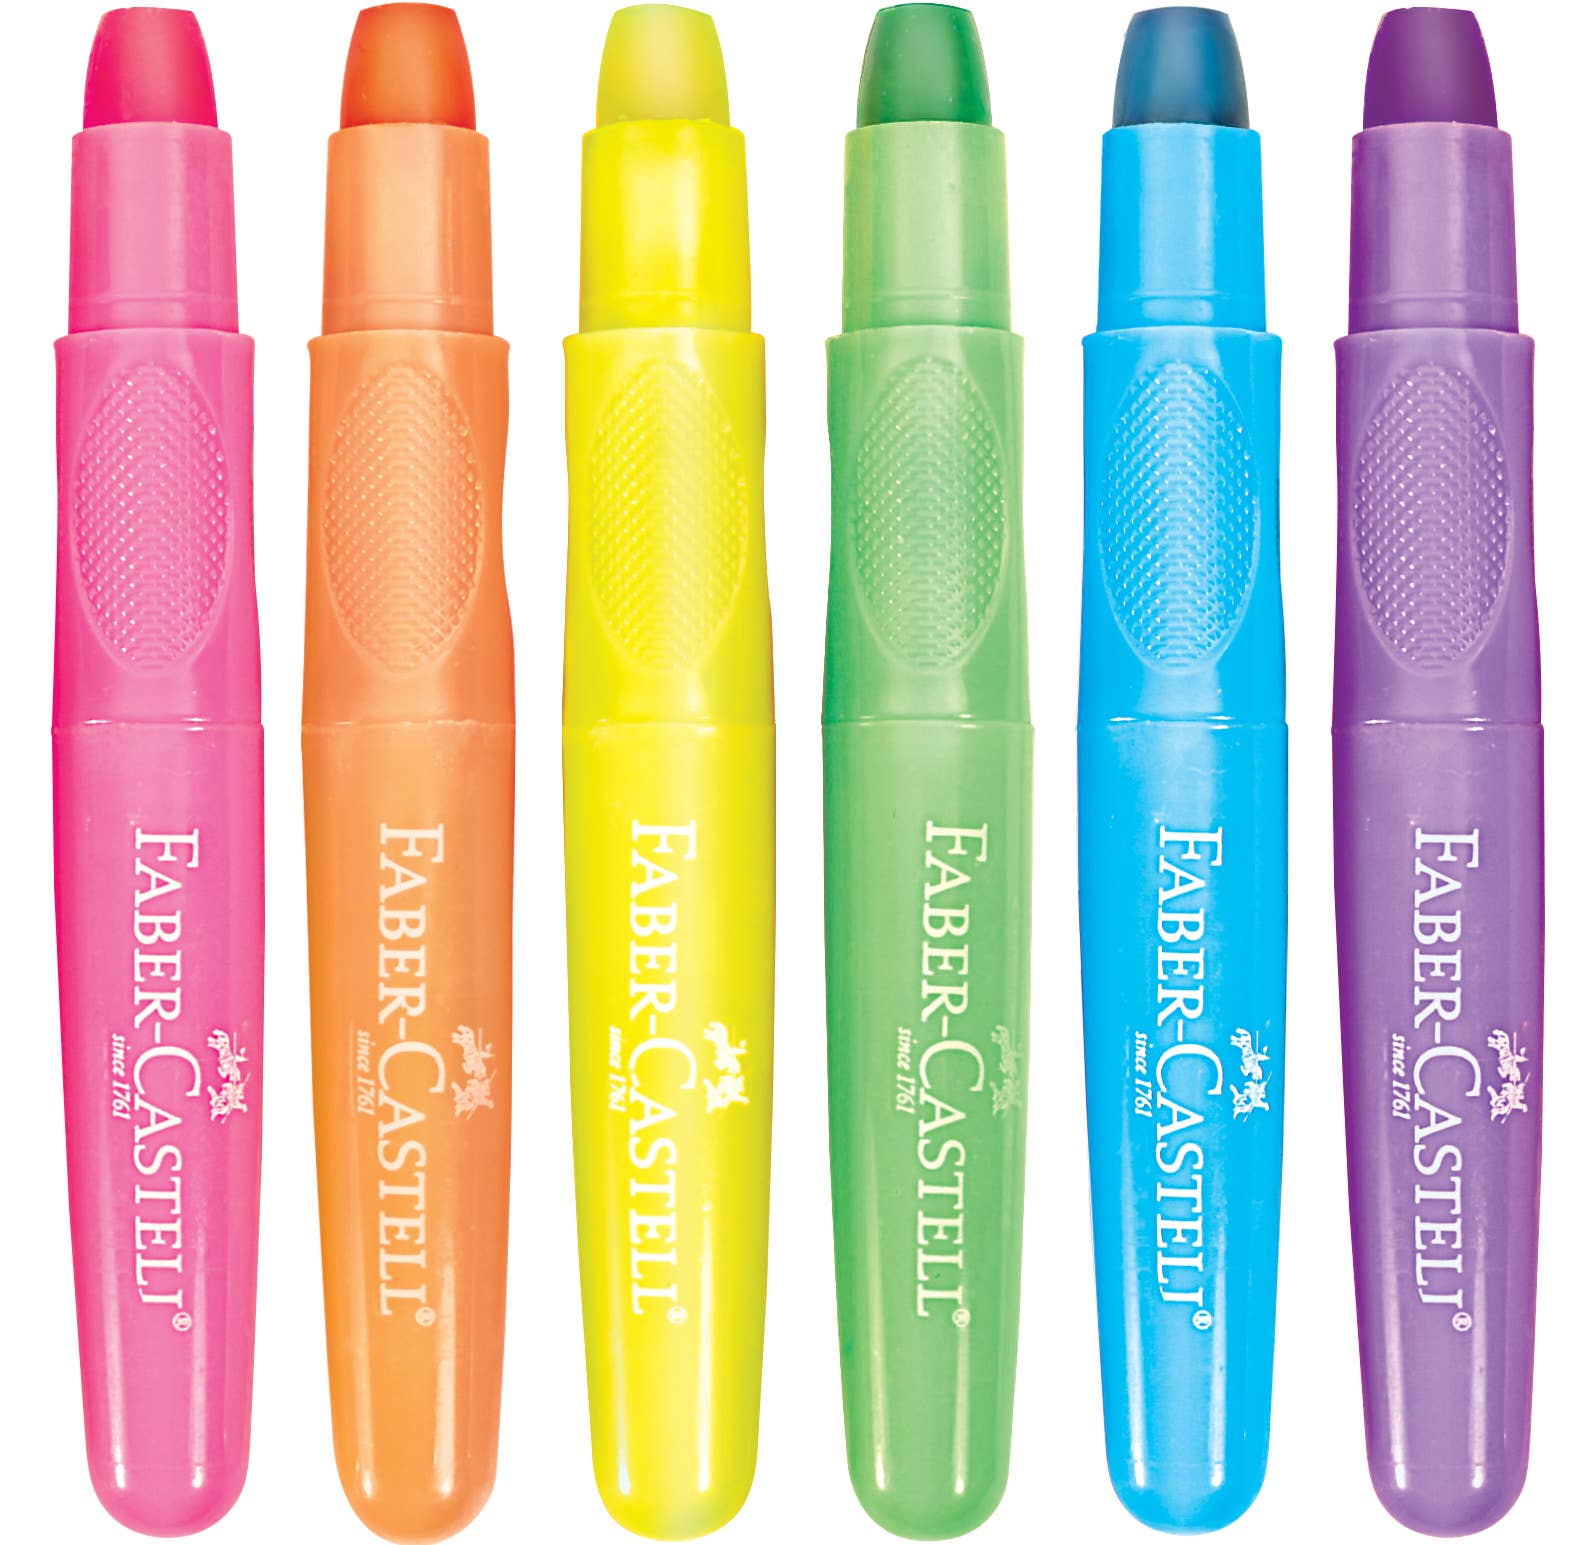 6 Neon Gel Crayons in Storage Case